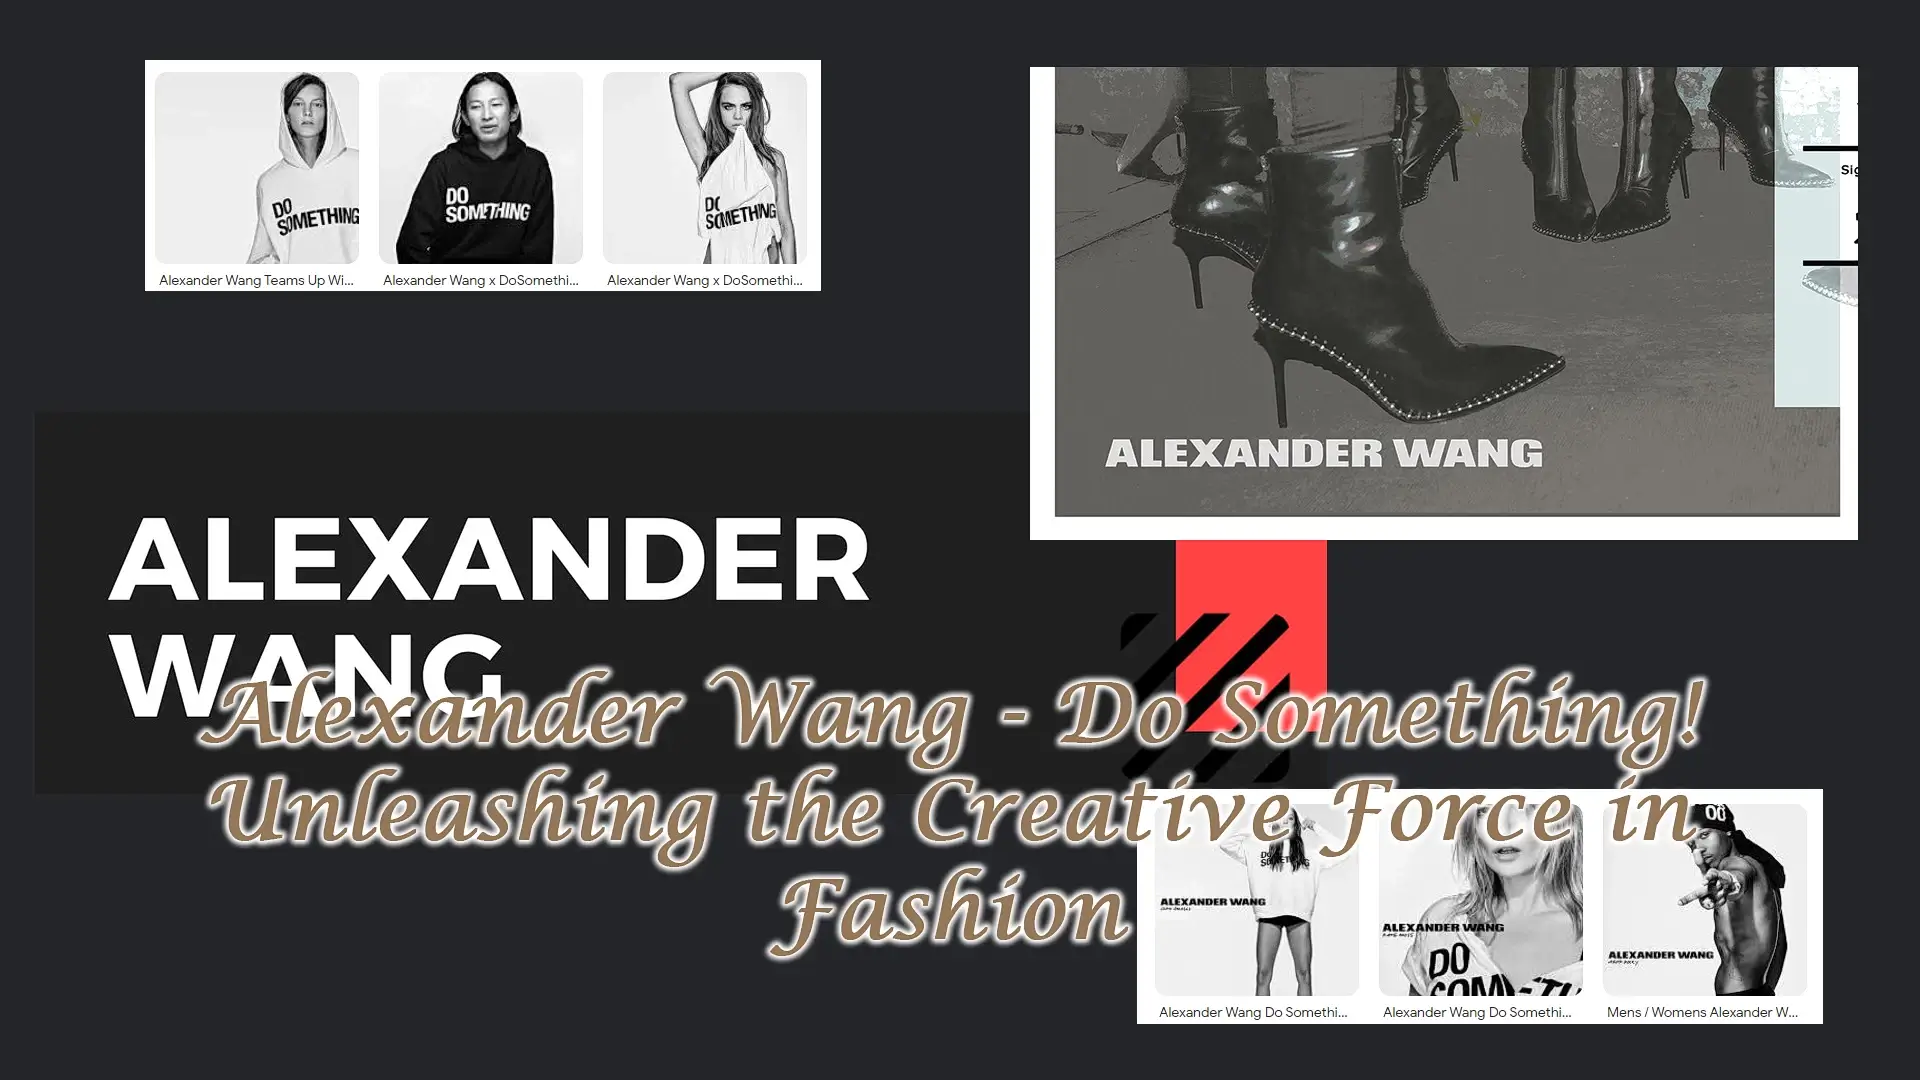 Alexander Wang - Do Something! The Maverick of Fashion